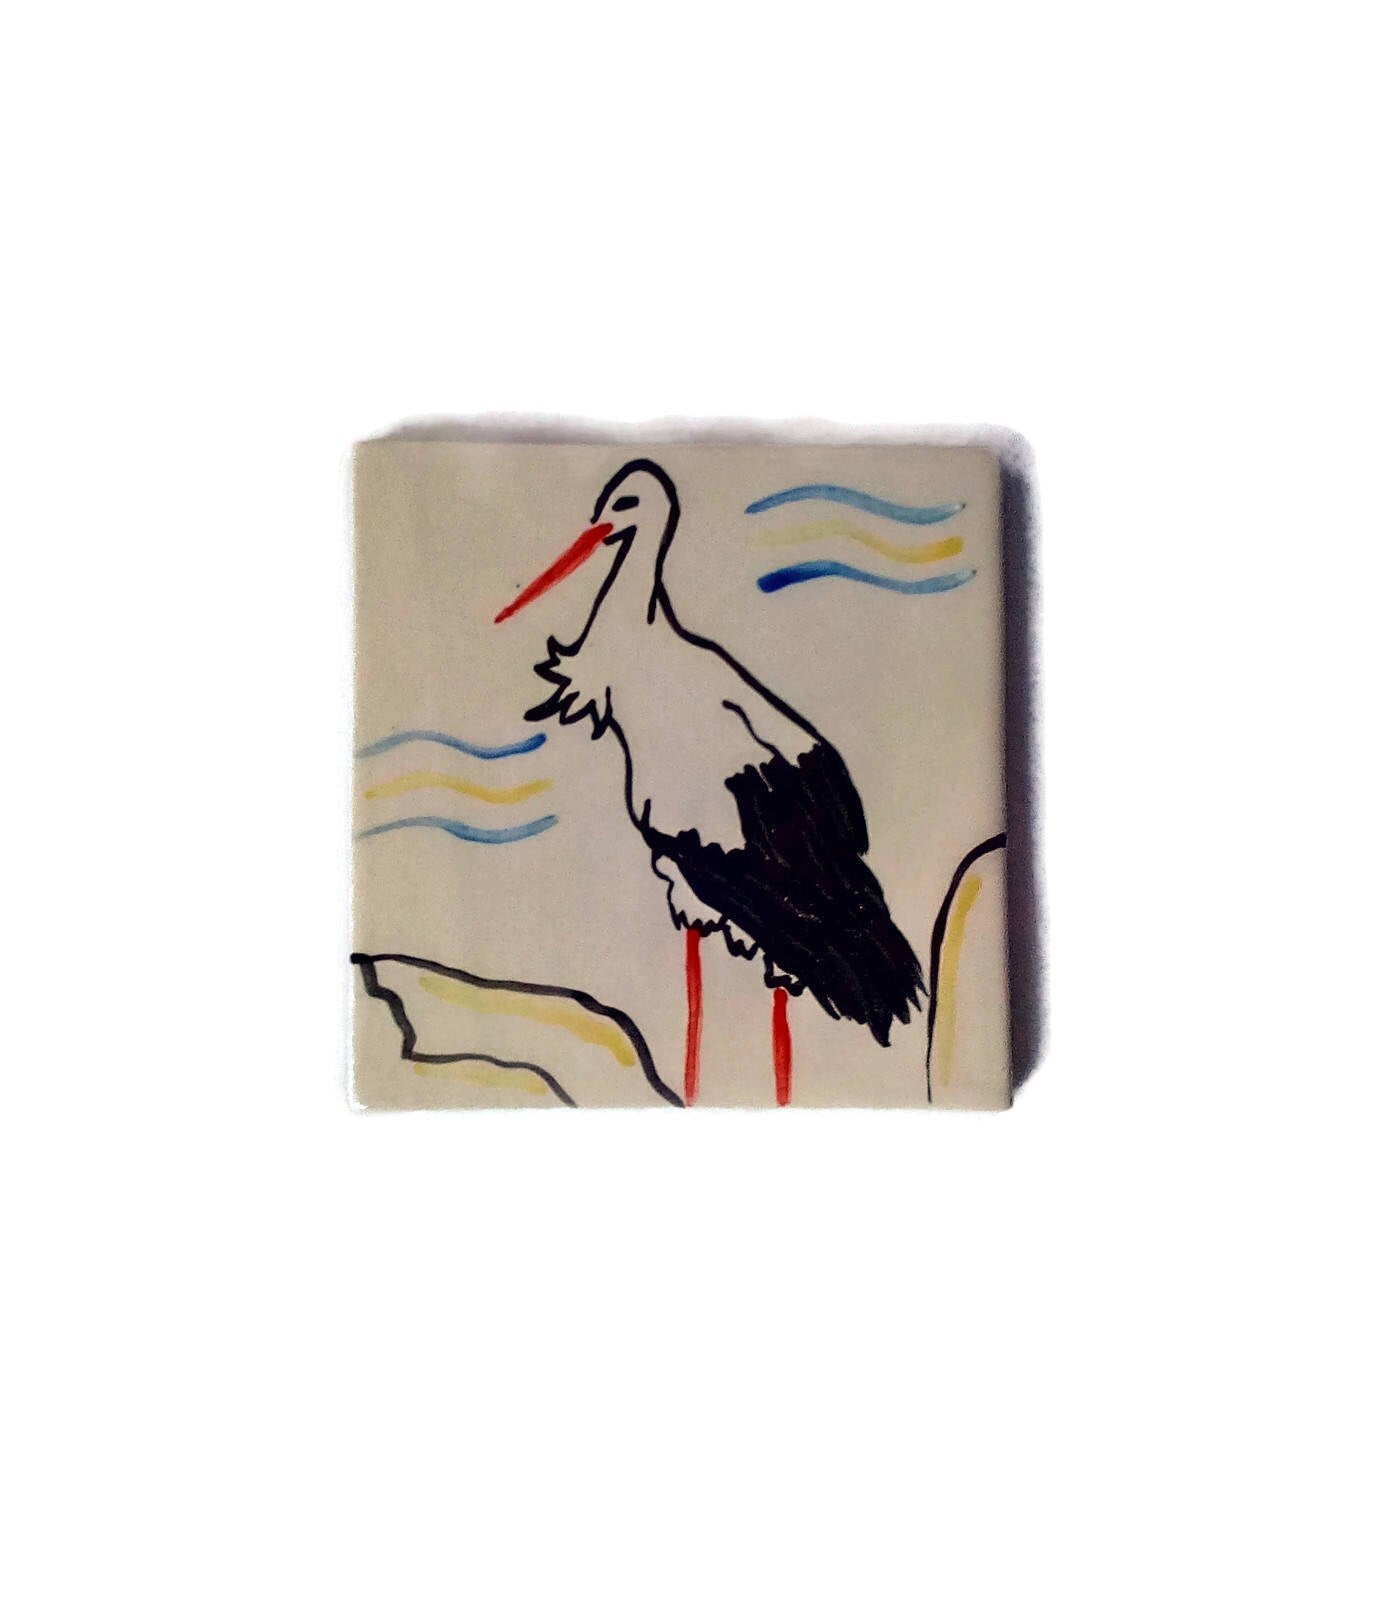 CERAMIC MOSAIC TILE Wall Art, Decorative Bird Tiles With Stork Design, Portuguese Gifts, Housewarming Gift First Home - Ceramica Ana Rafael